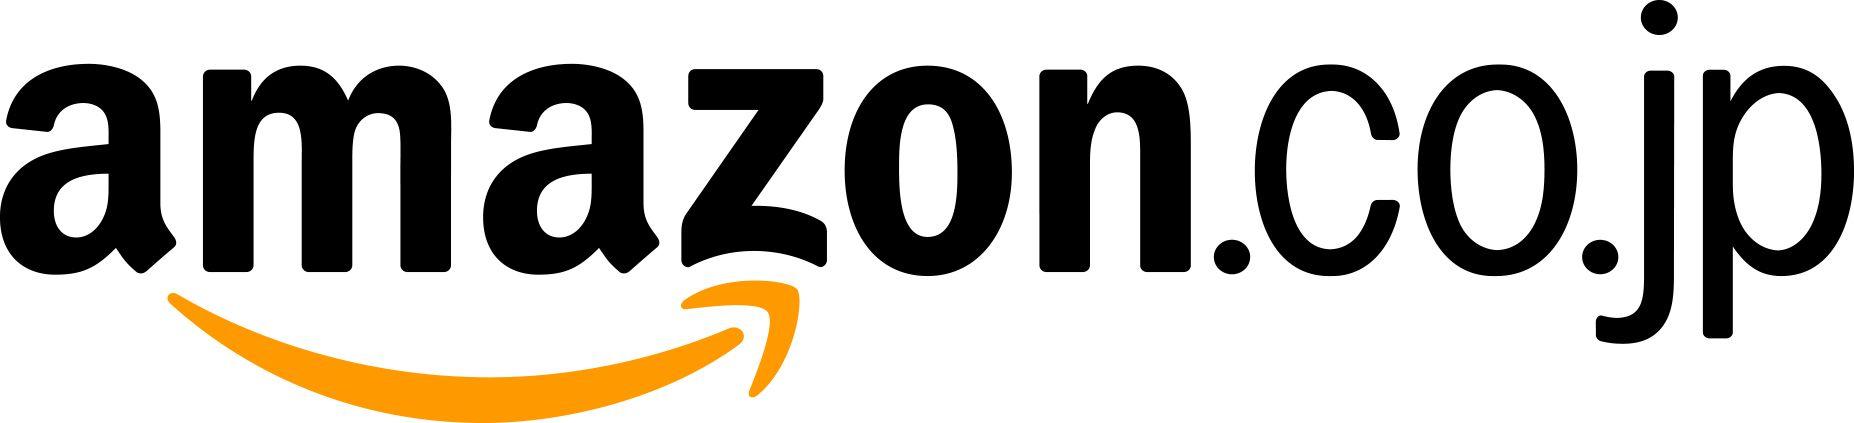 Amazon Company Logo - Images - Logos